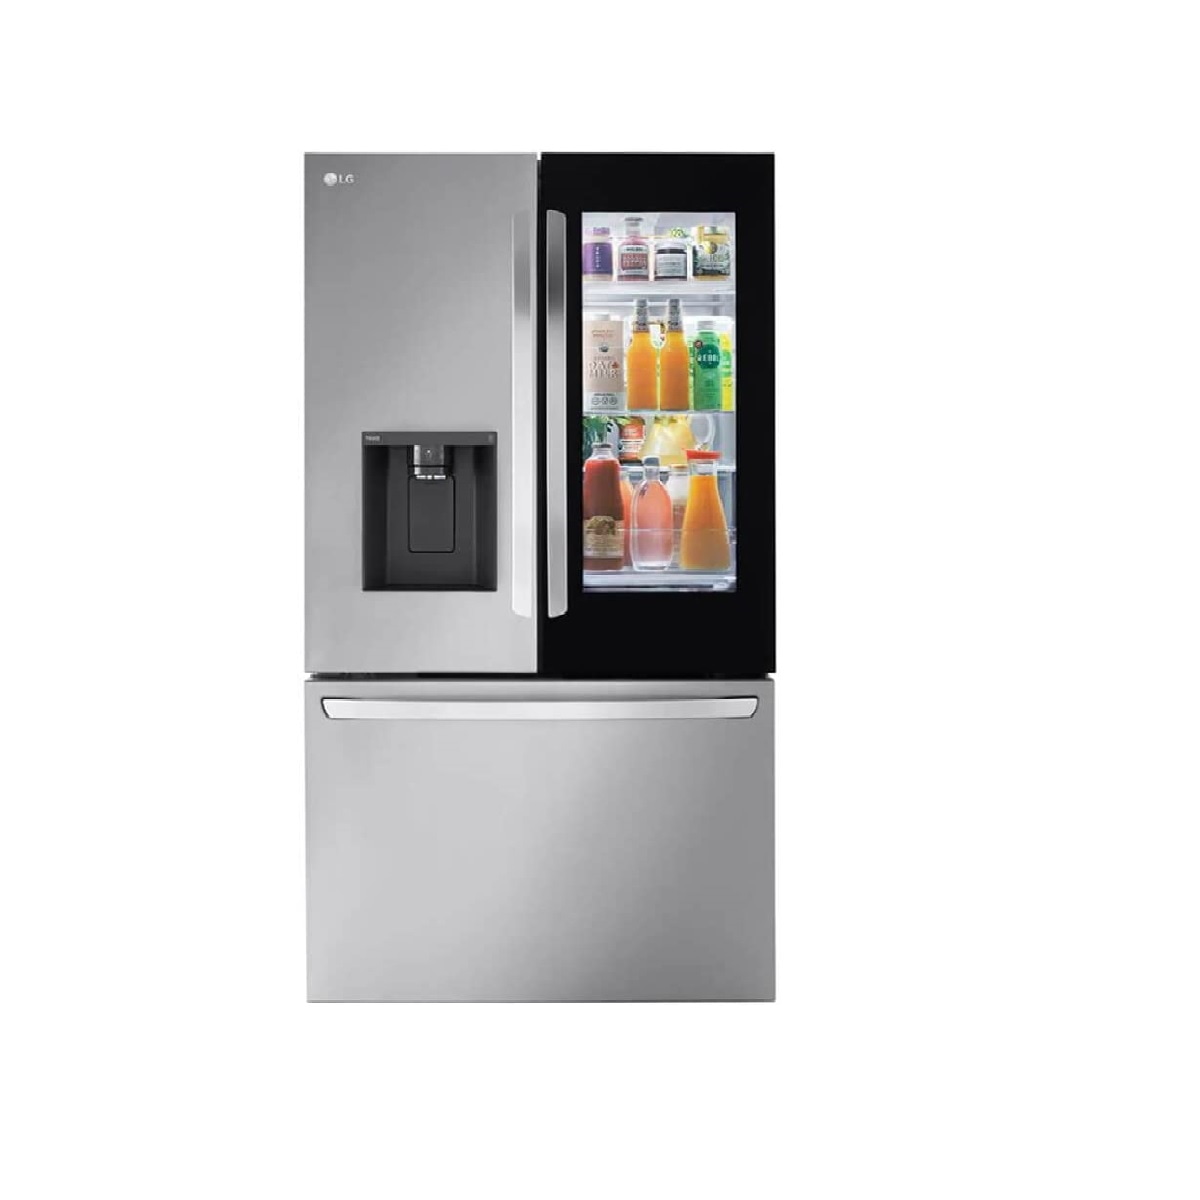 LG refrigerator troubleshooting manual